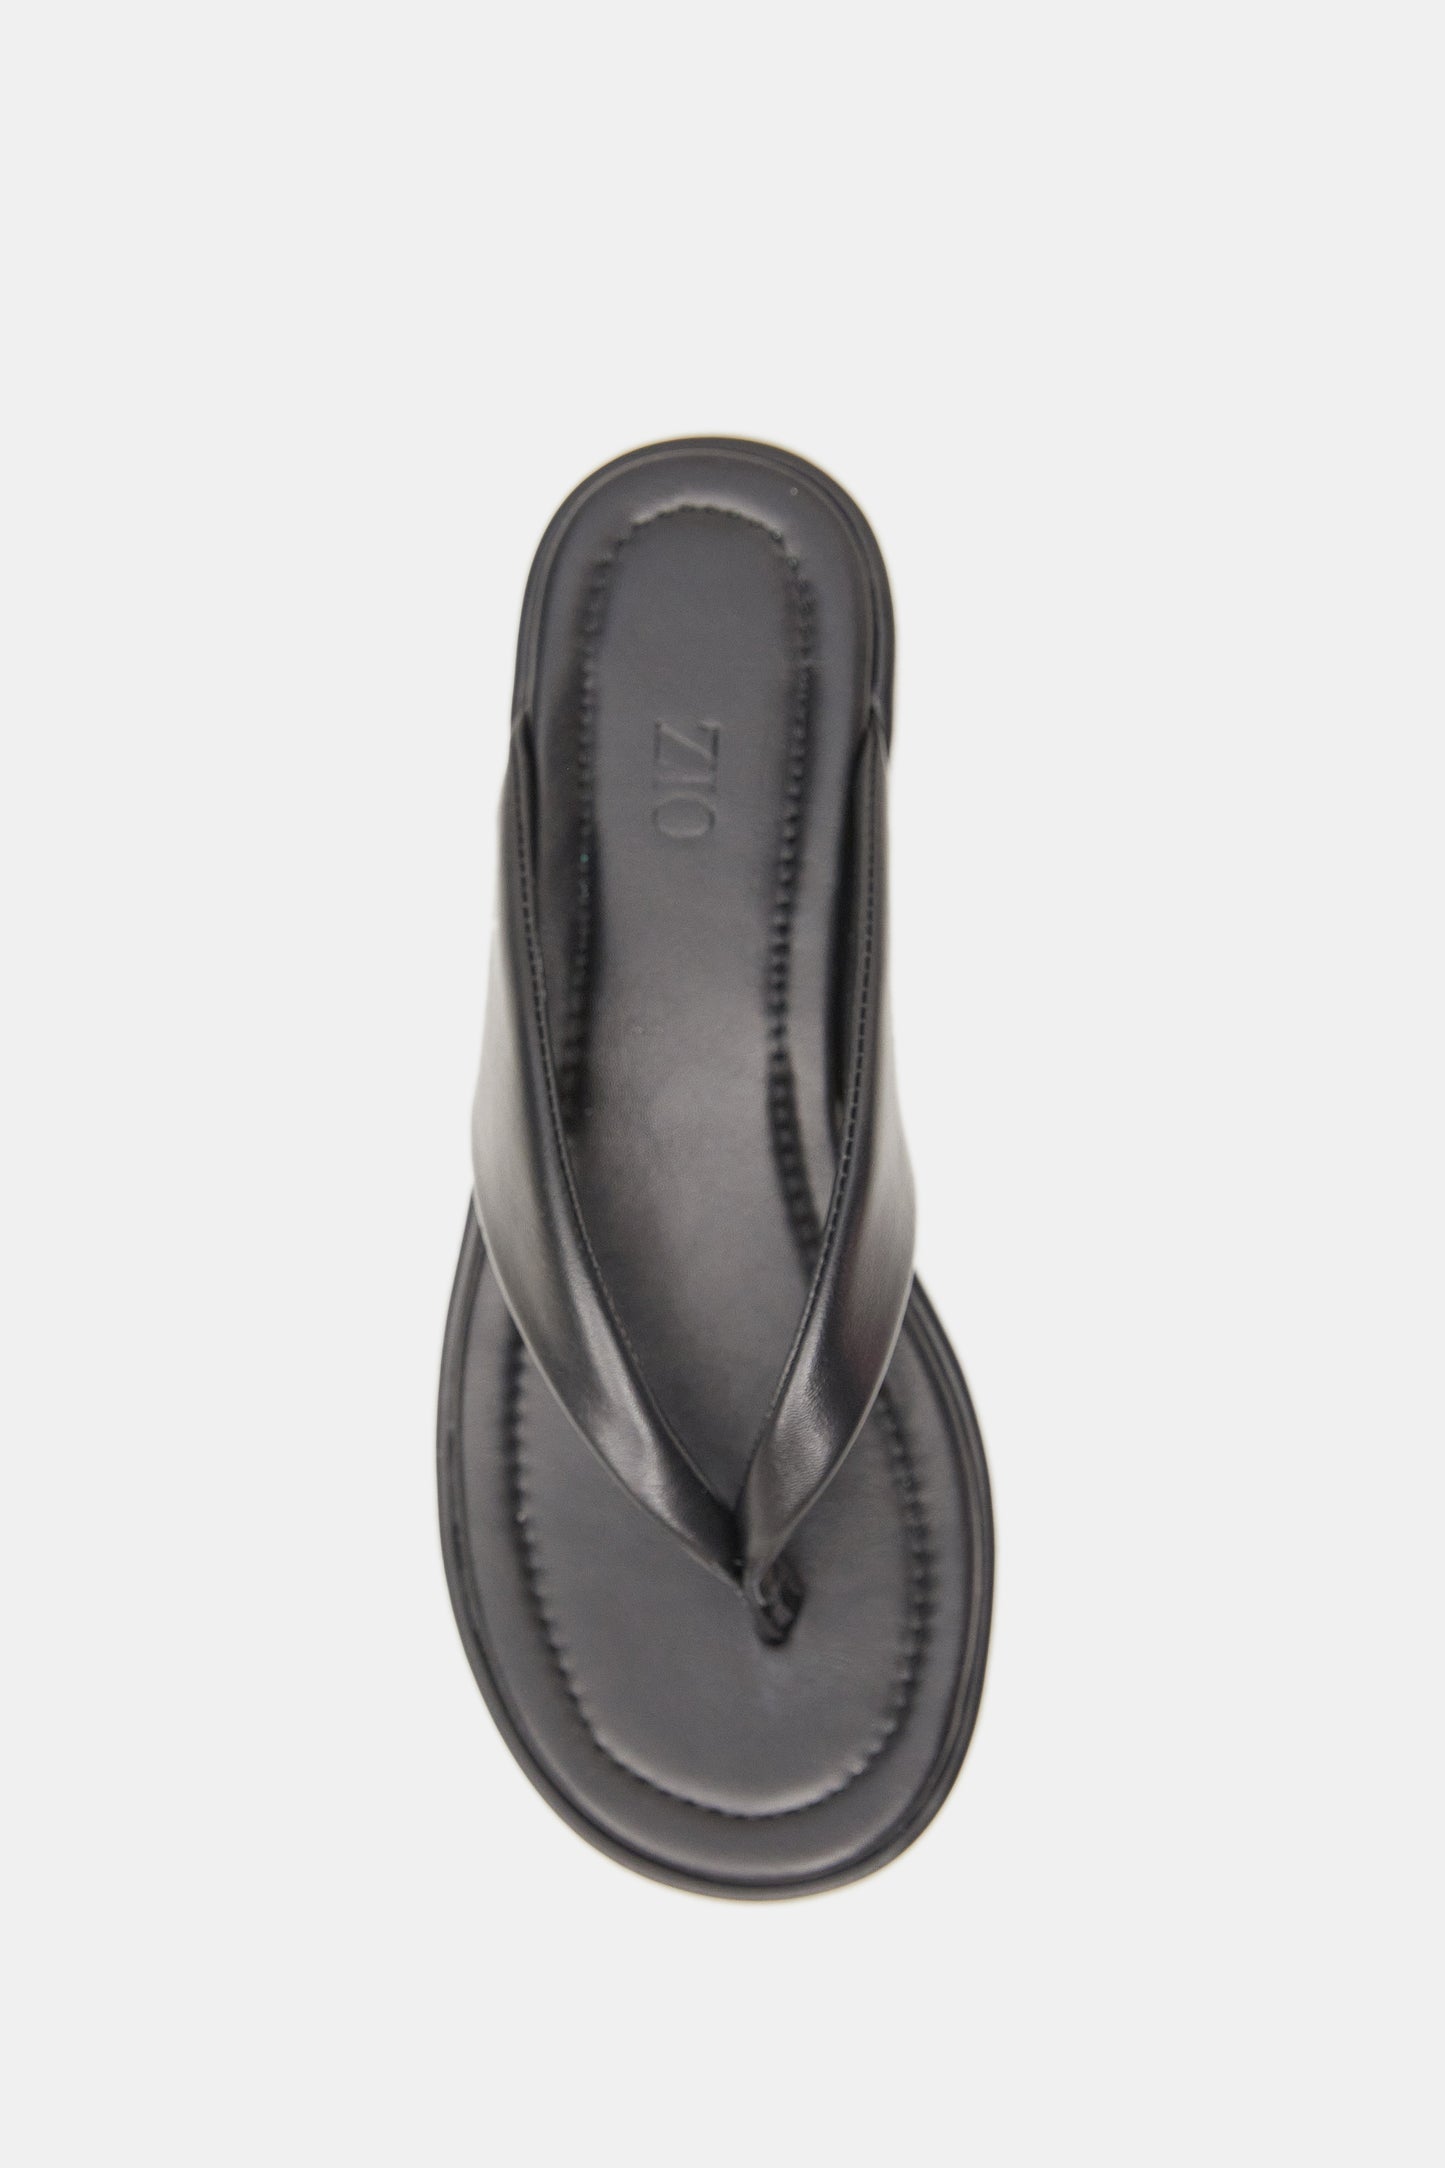 Padded Thong Platform Sandals, Black